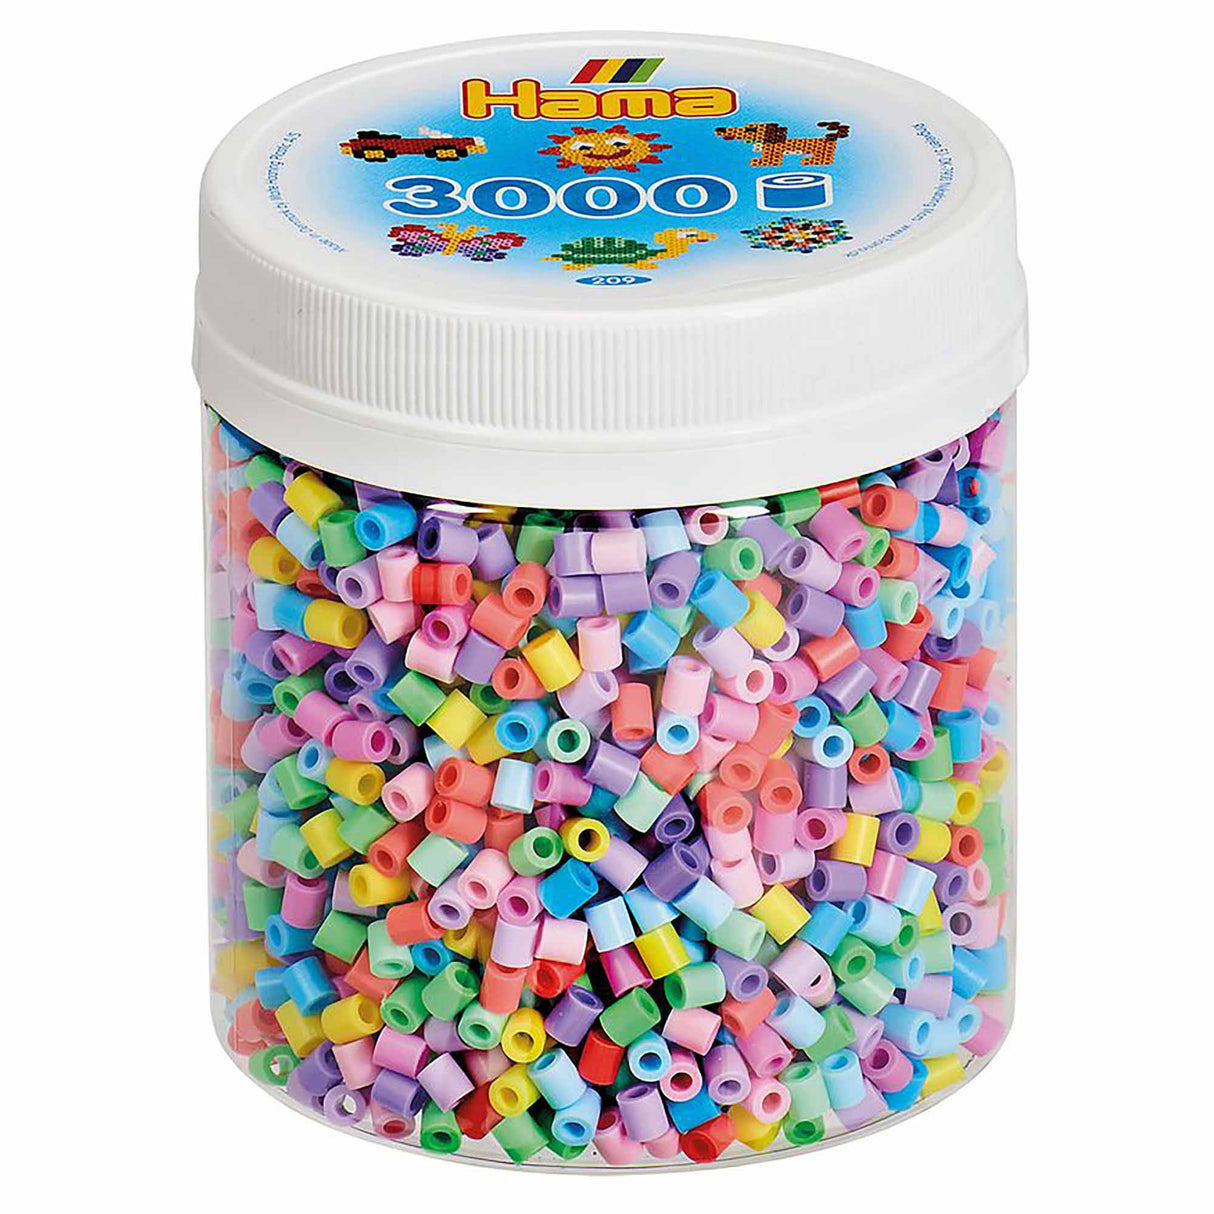 Hama Beads - Pastel Tub Pack (3000 beads)